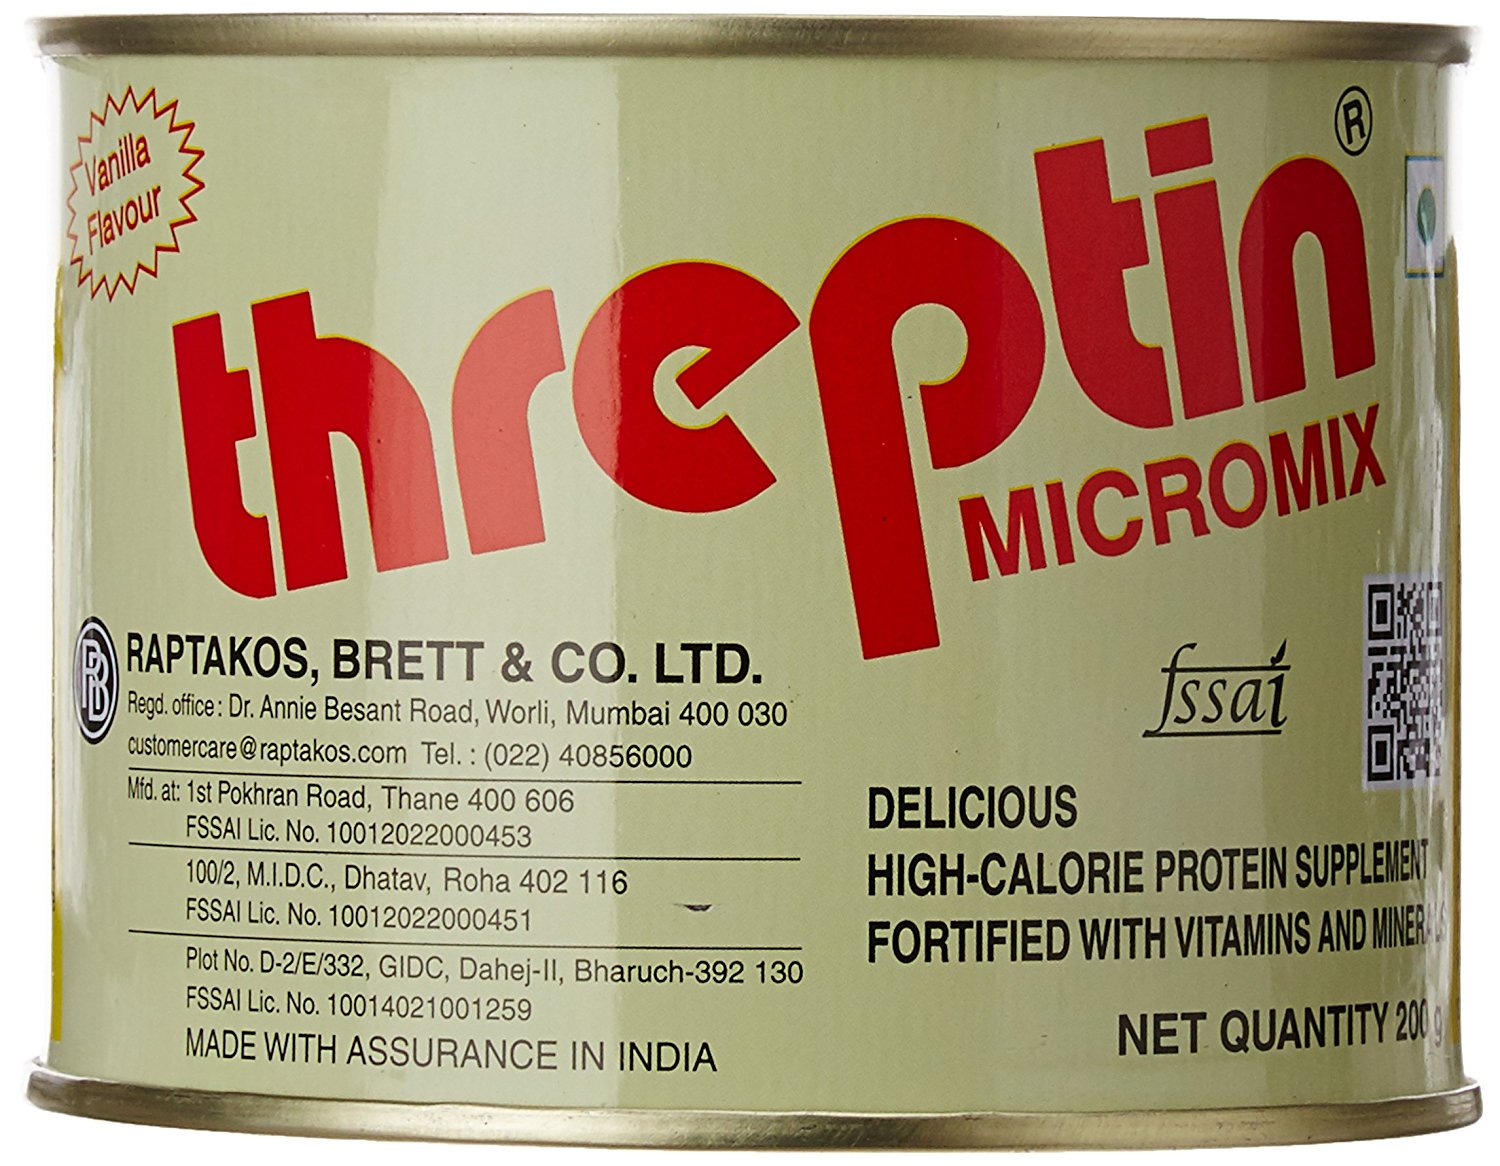 threptin micromix 200gm